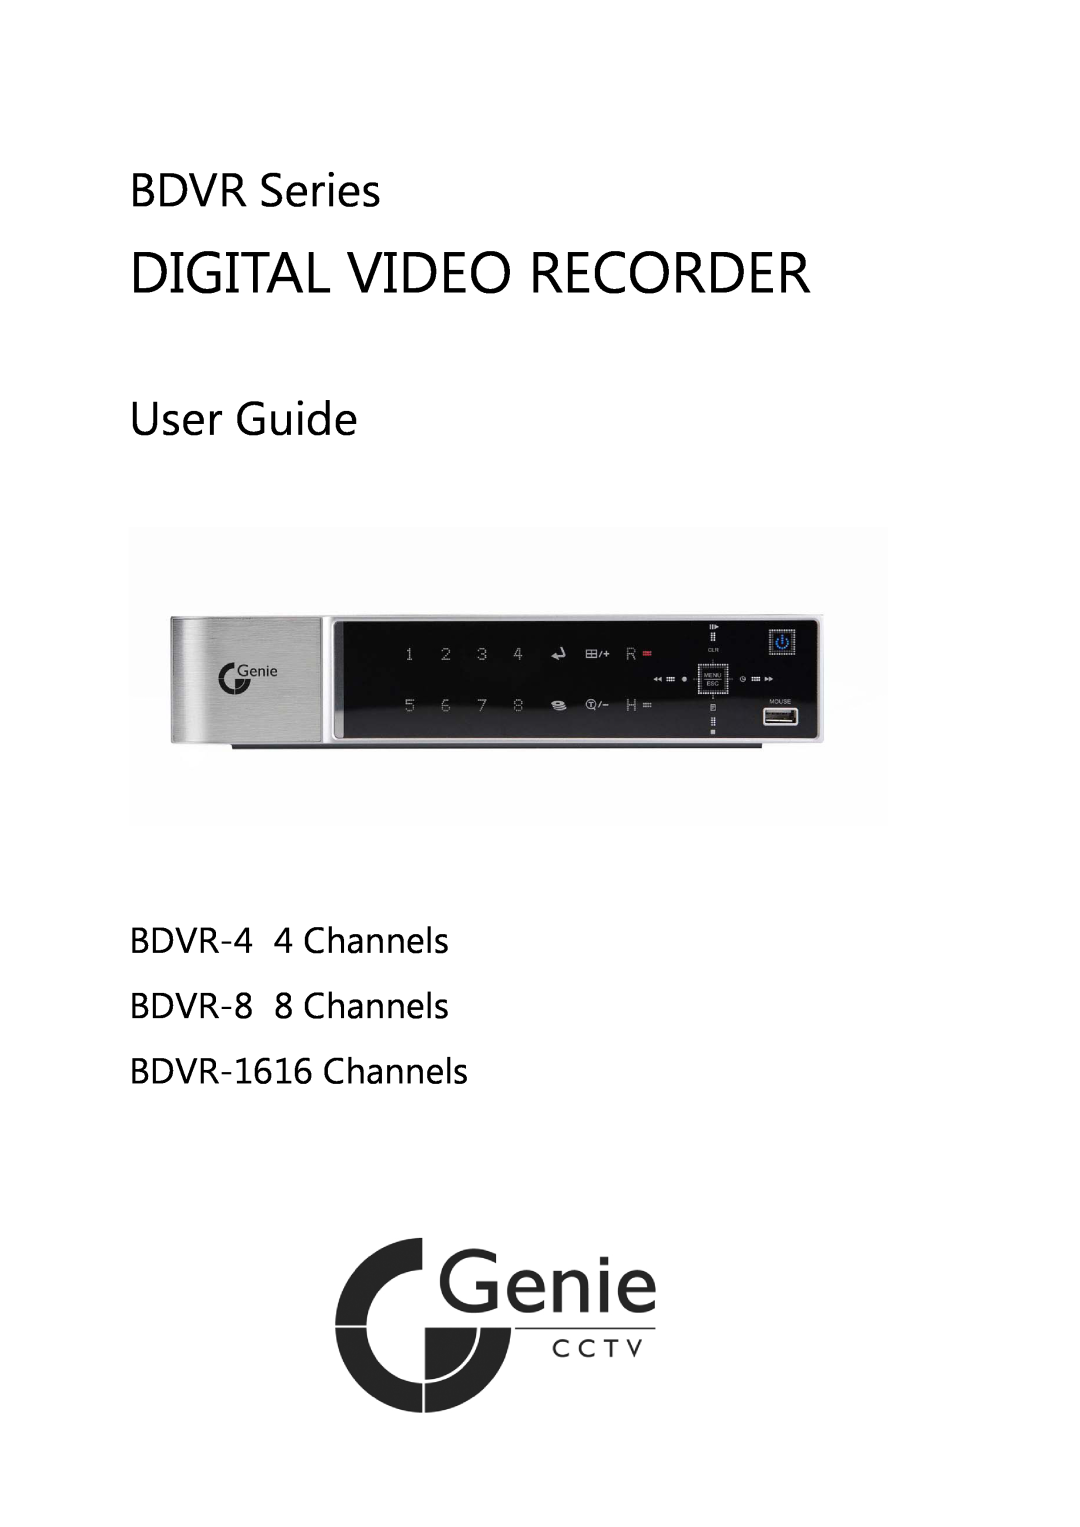 Genie BDVR-16, BDVR-8, BDVR-4 manual Digital Video Recorder, BDVR Series, User Guide 